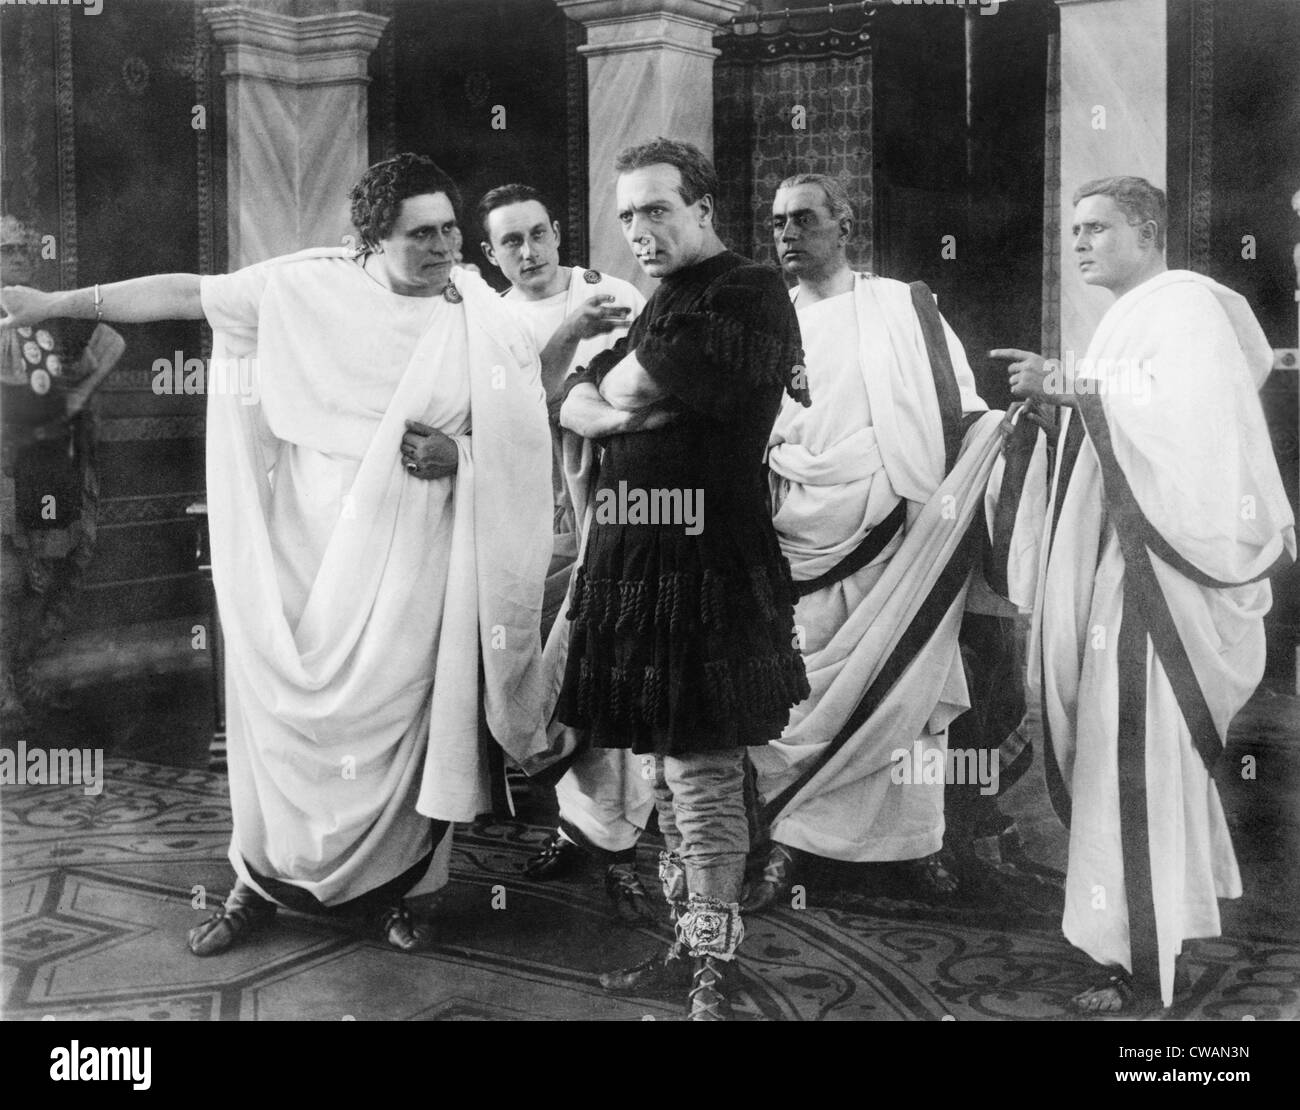 Amleto (Anthony) Novelli (1885-1924), Italian actor in a movie still from JULIUS CAESAR, 1914. Scene shows Novelli, as Caesar, Stock Photo